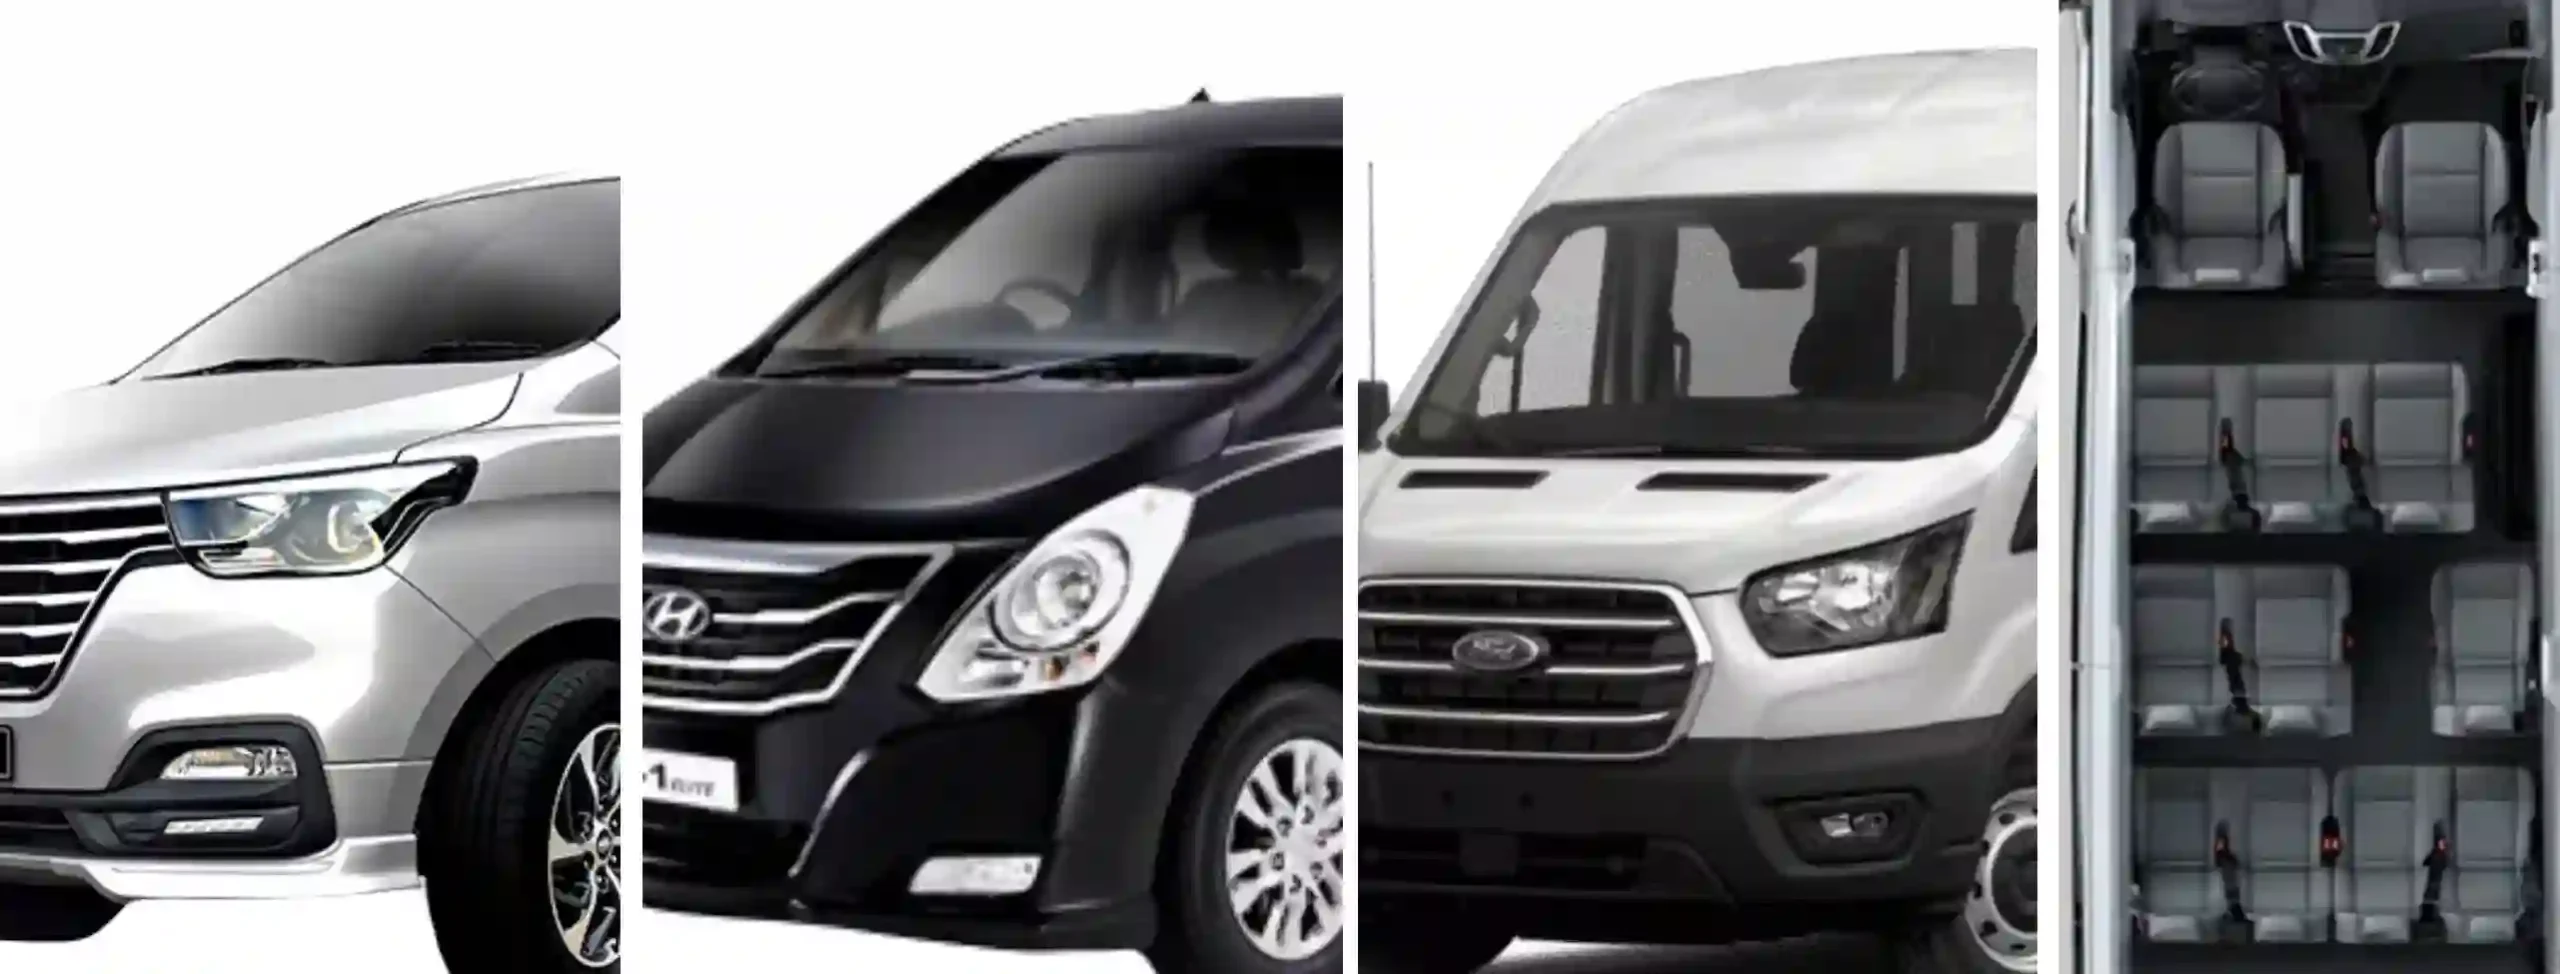 10-Seater-Hyundai-H-7-Passengers-Car-Rental-Dubai-